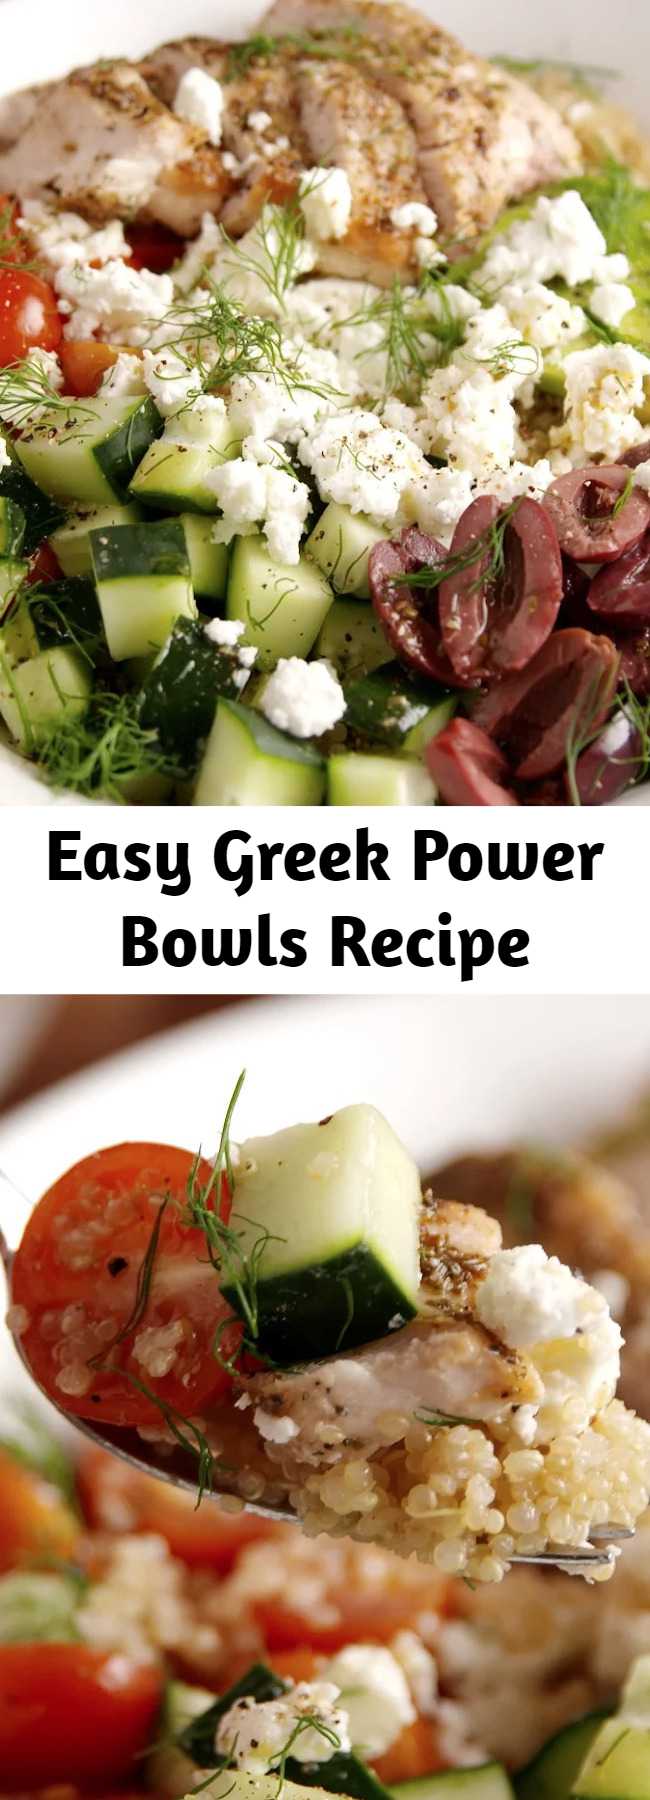 Easy Greek Power Bowls Recipe - Get us to the Greek [bowl]!